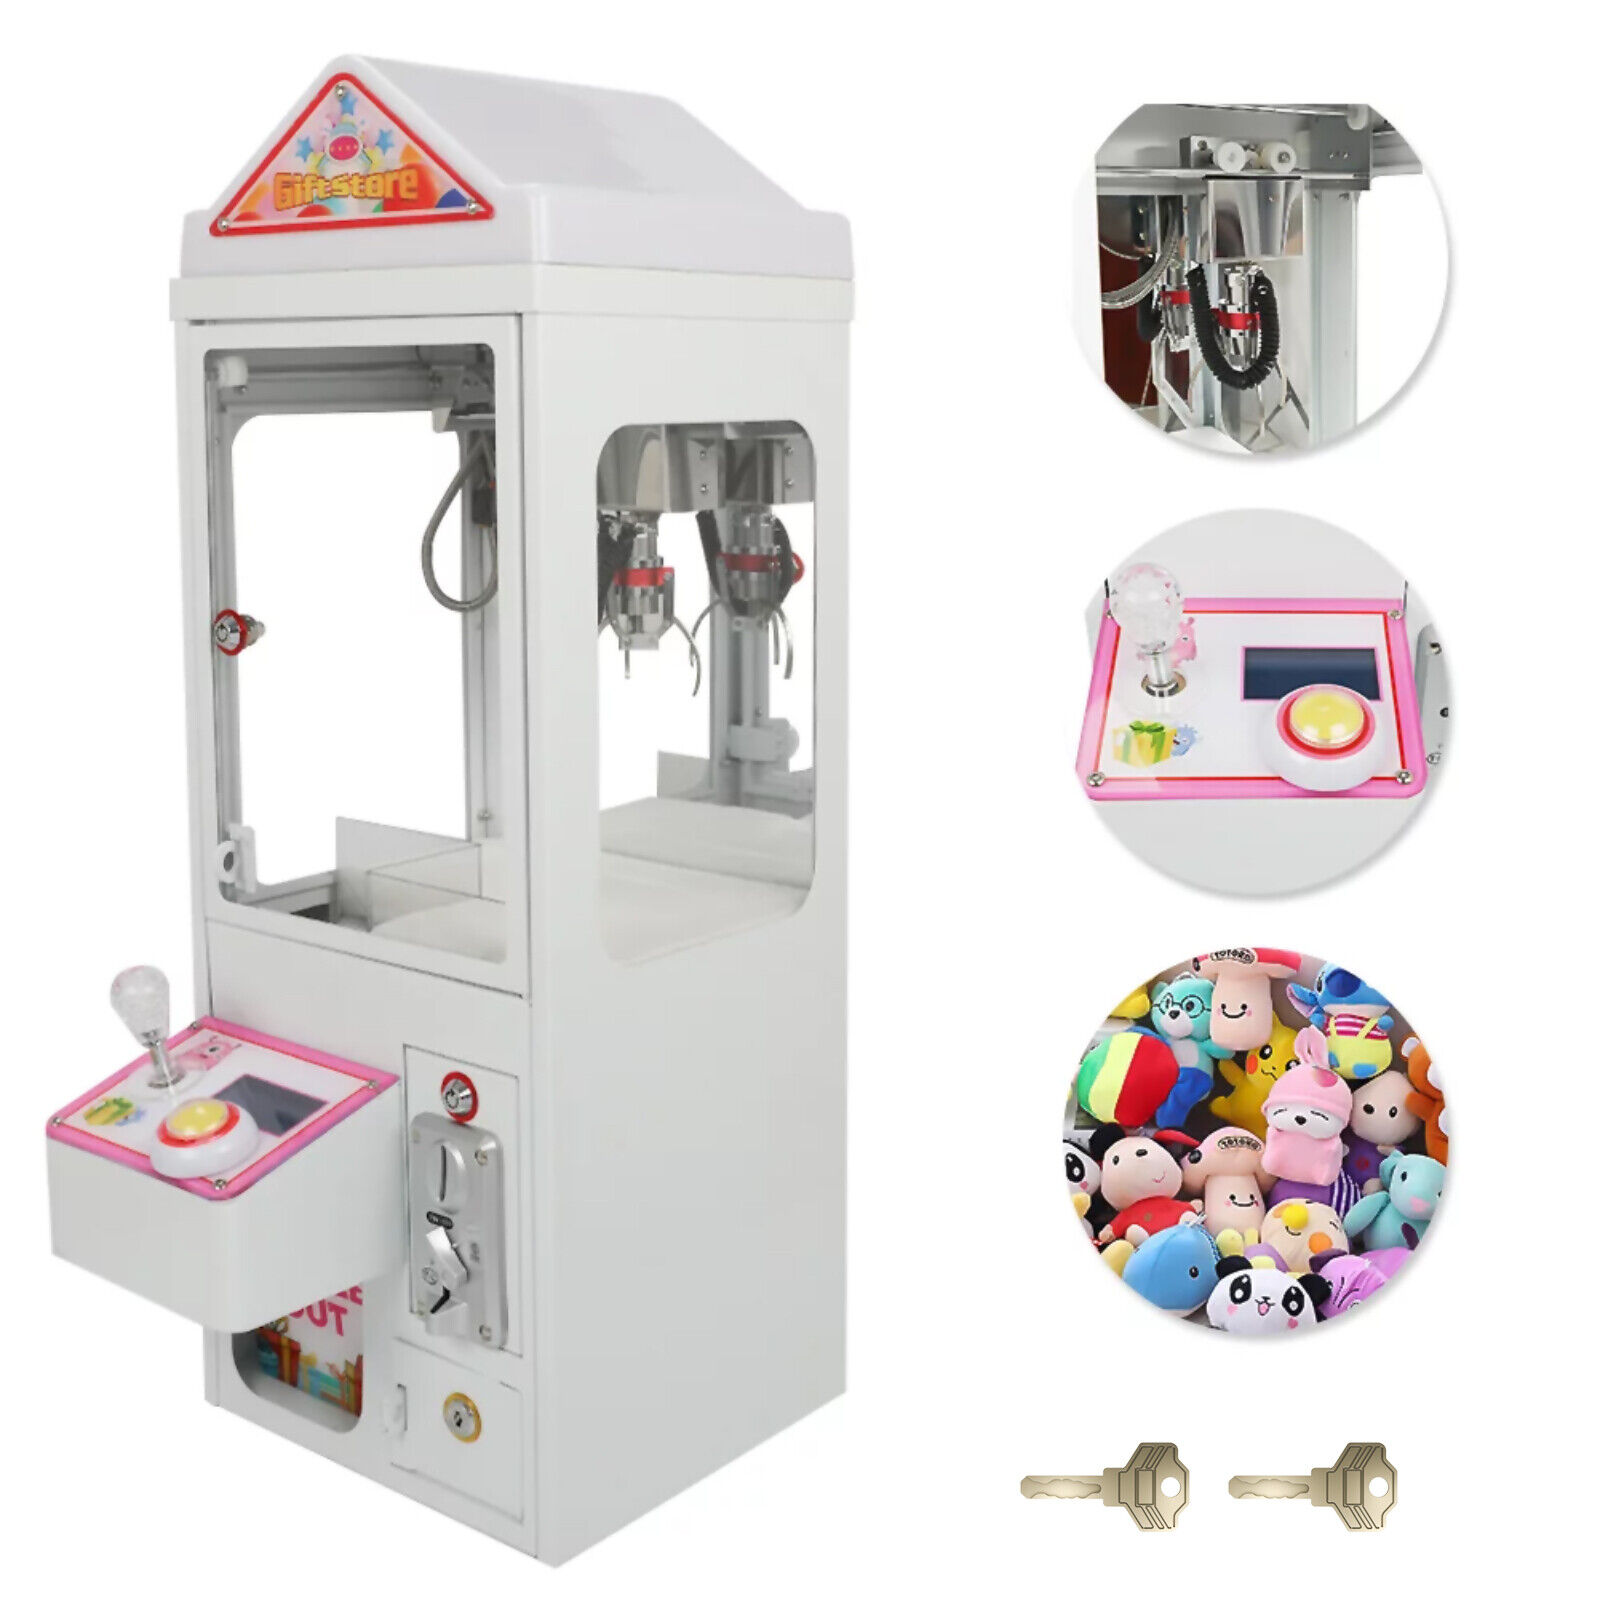 Electronic Claw Crane Mini Doll Machine Arcade Candy Grabber Toy Kids Gift DIY